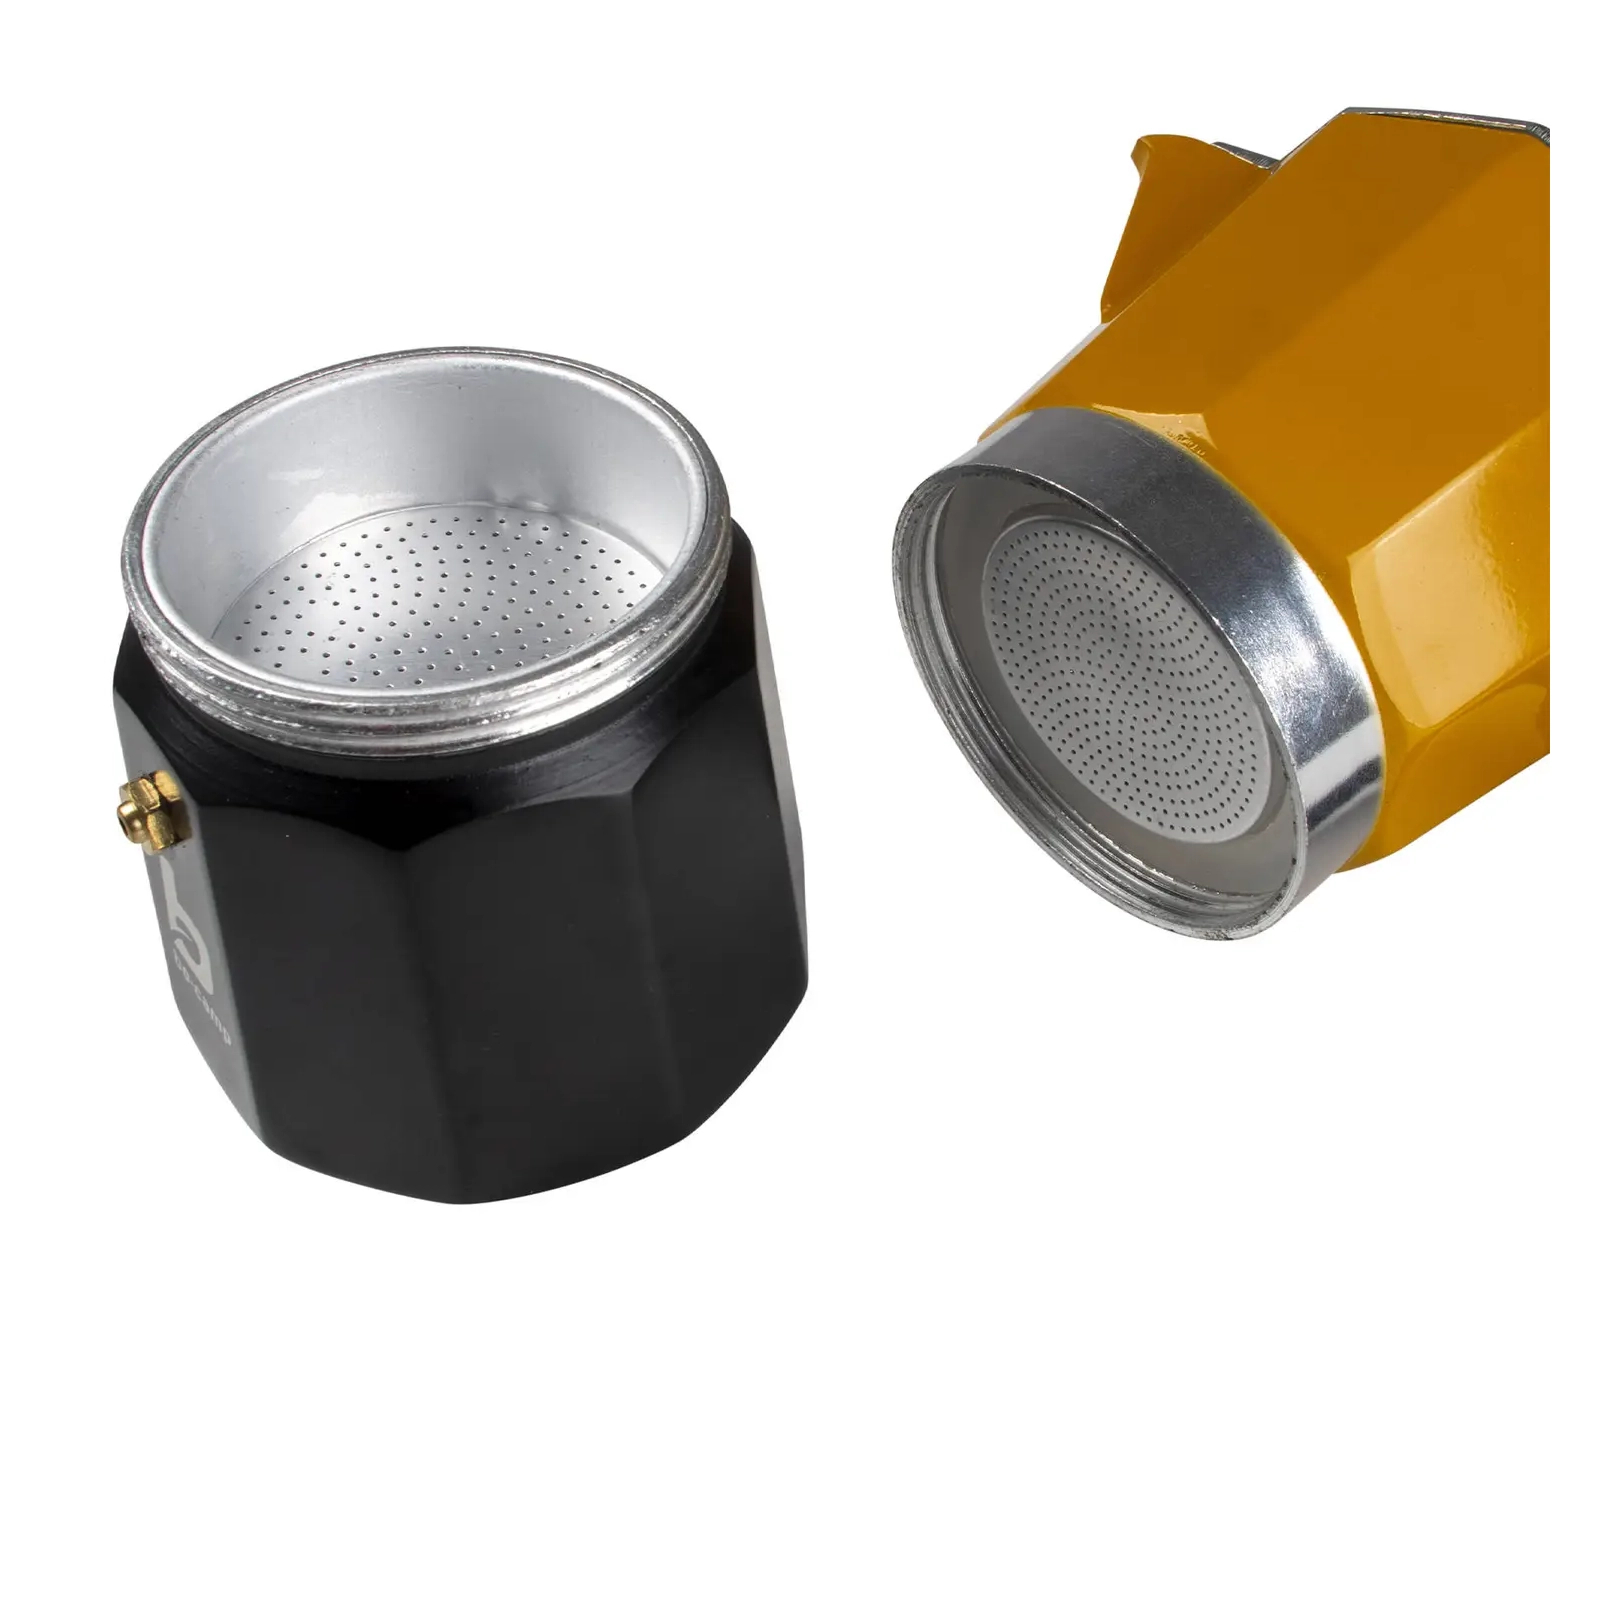 Гейзерная кофеварка Bo-Camp Hudson 3-cups Yellow/Black (2200518) изображение 2